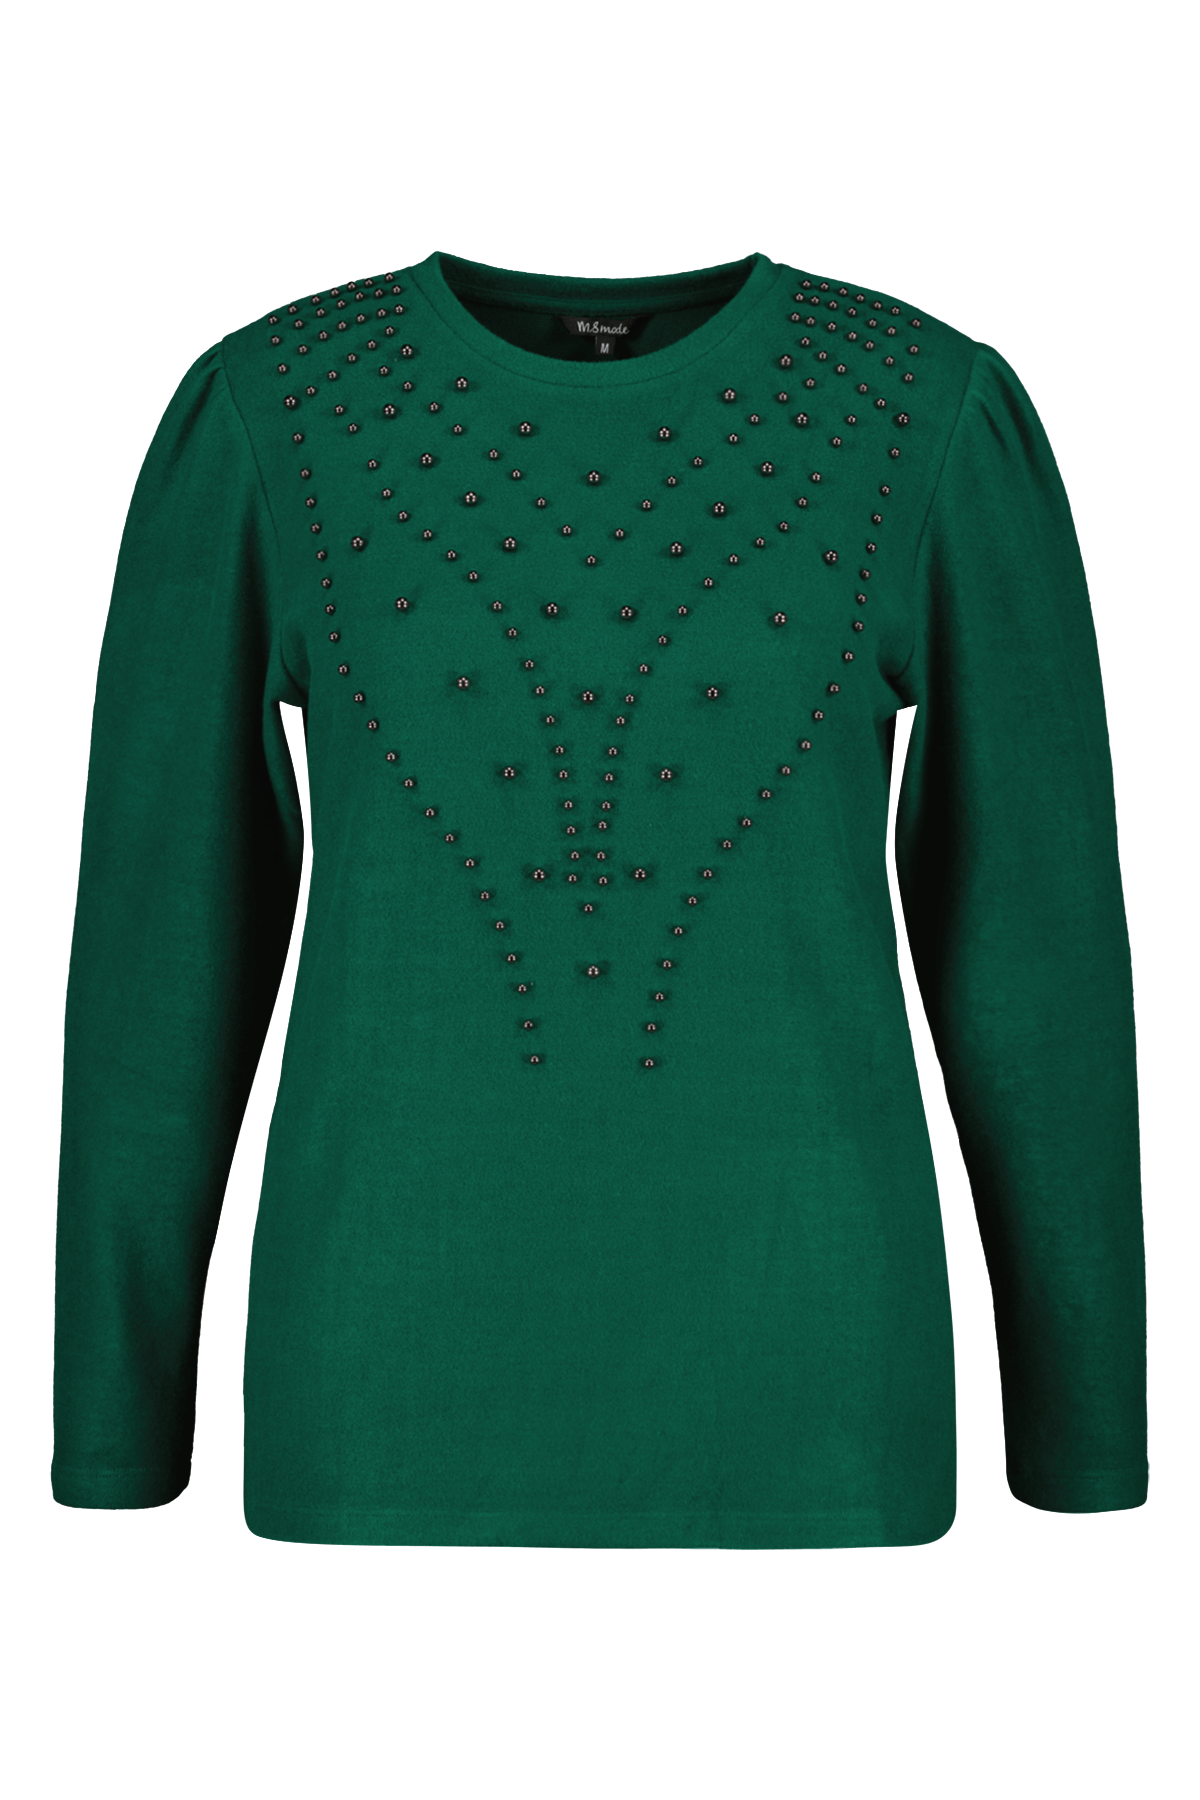 Sweater con detalles de perlas image number 1